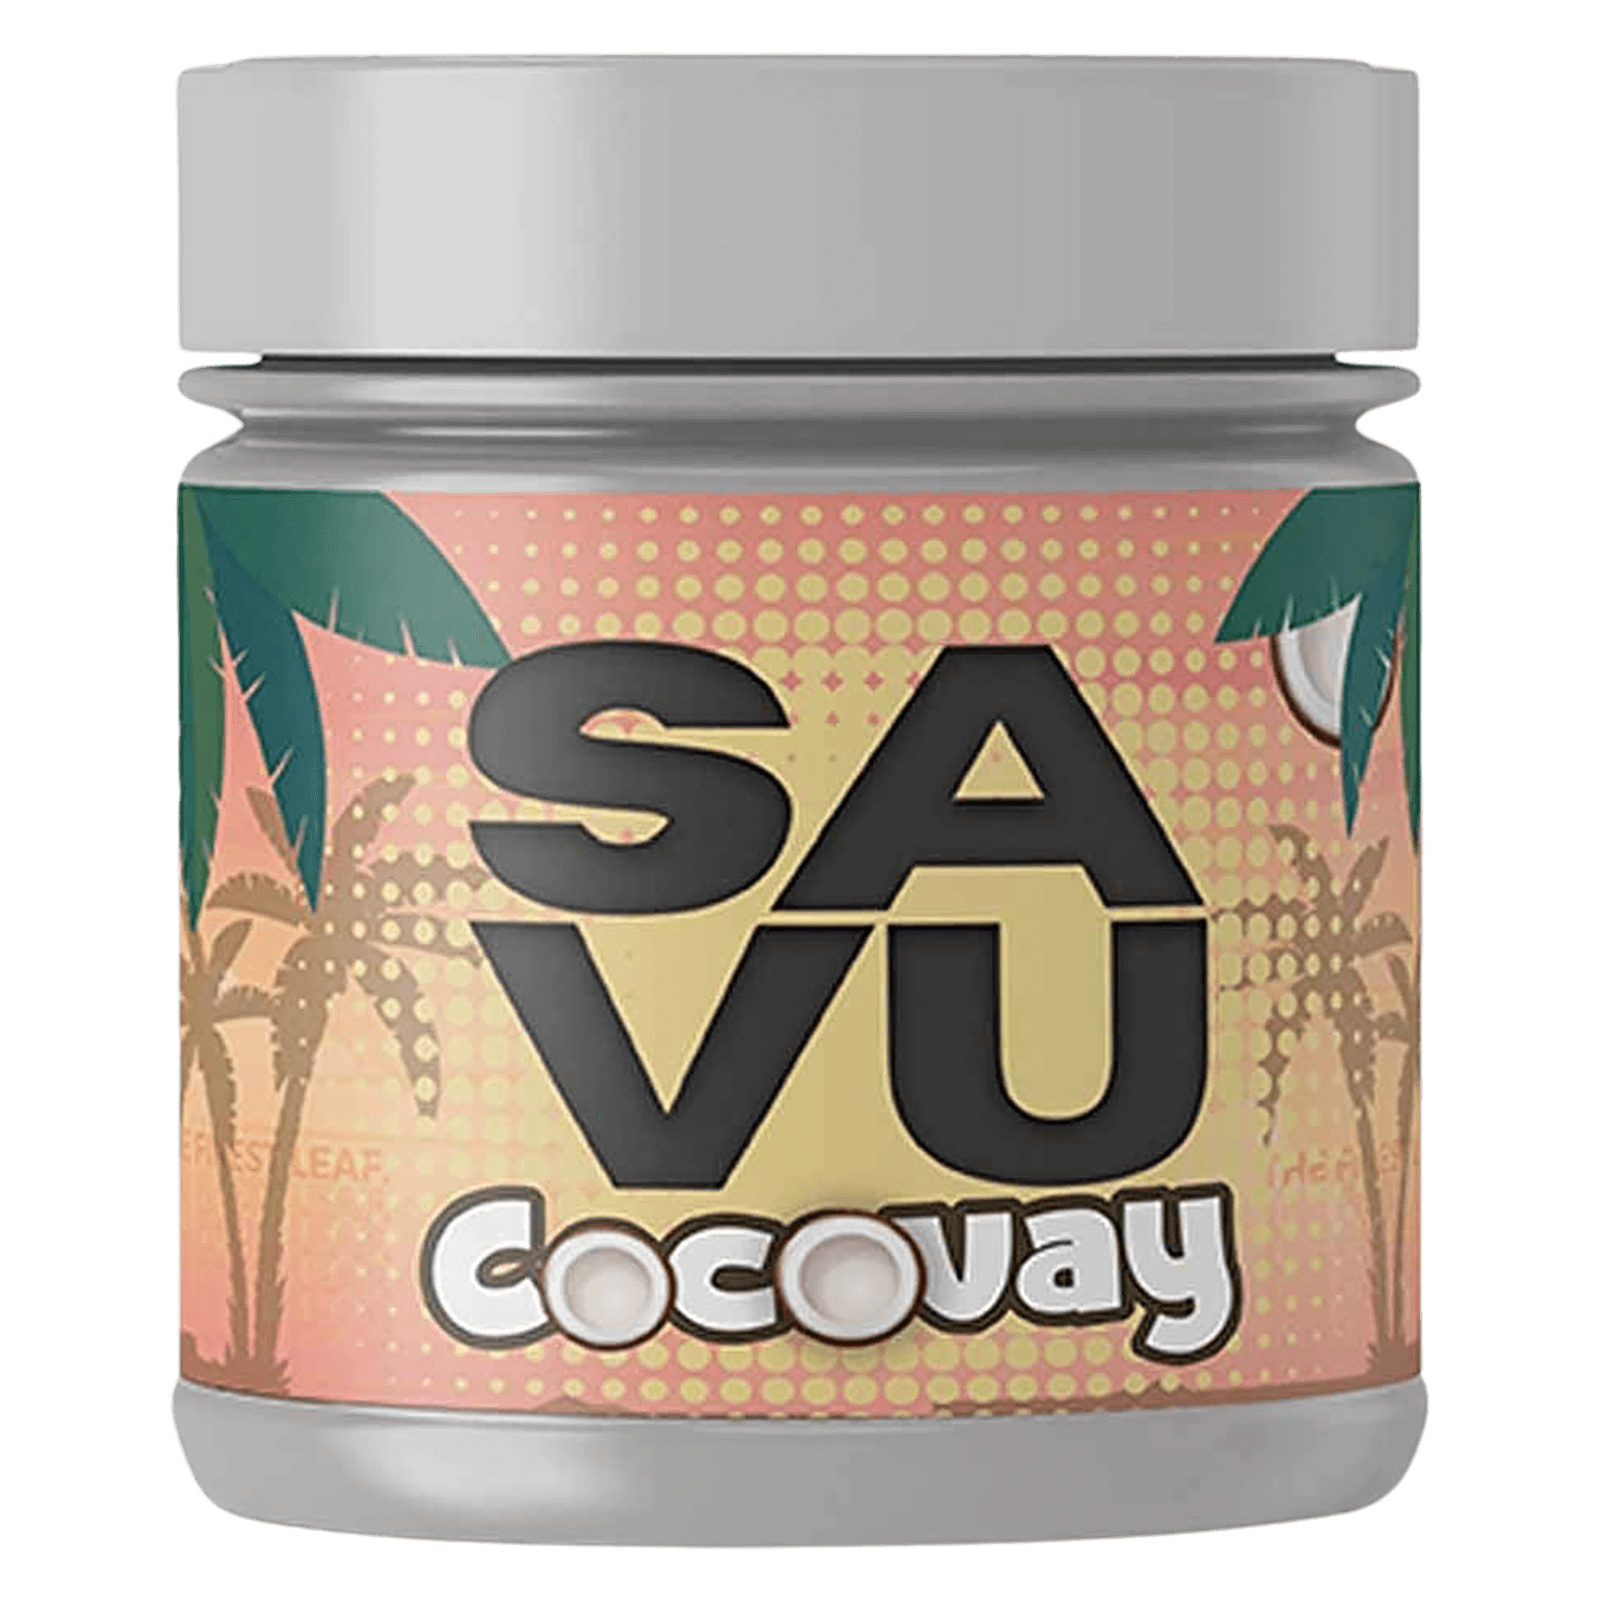 Savu 25g - Cocovay